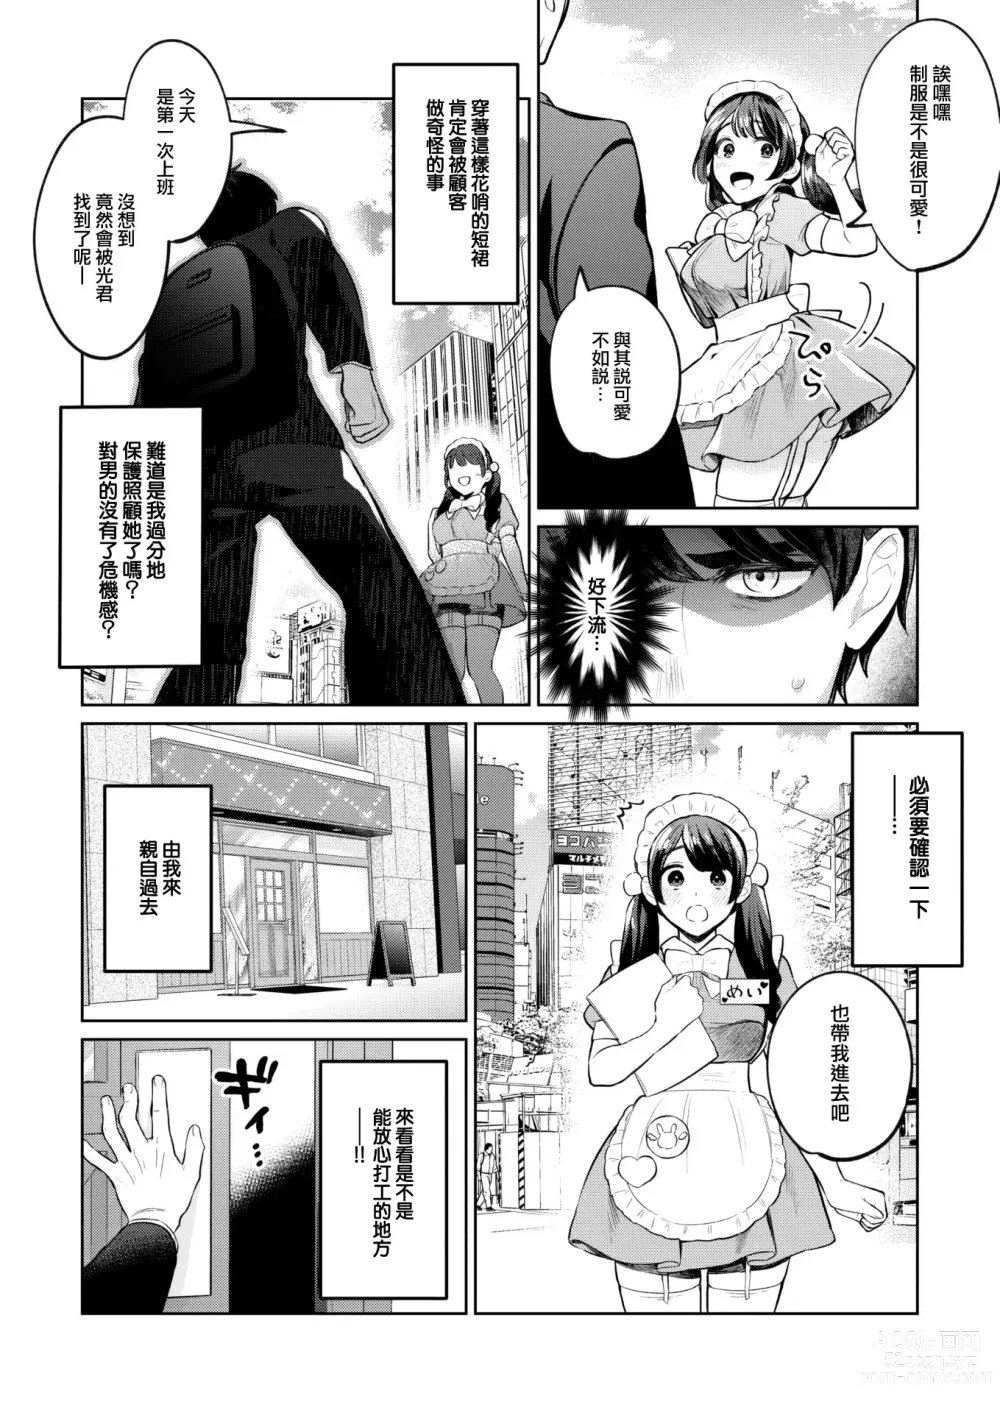 Page 4 of manga Osawari OK na Maid Cafe ni Gochuui